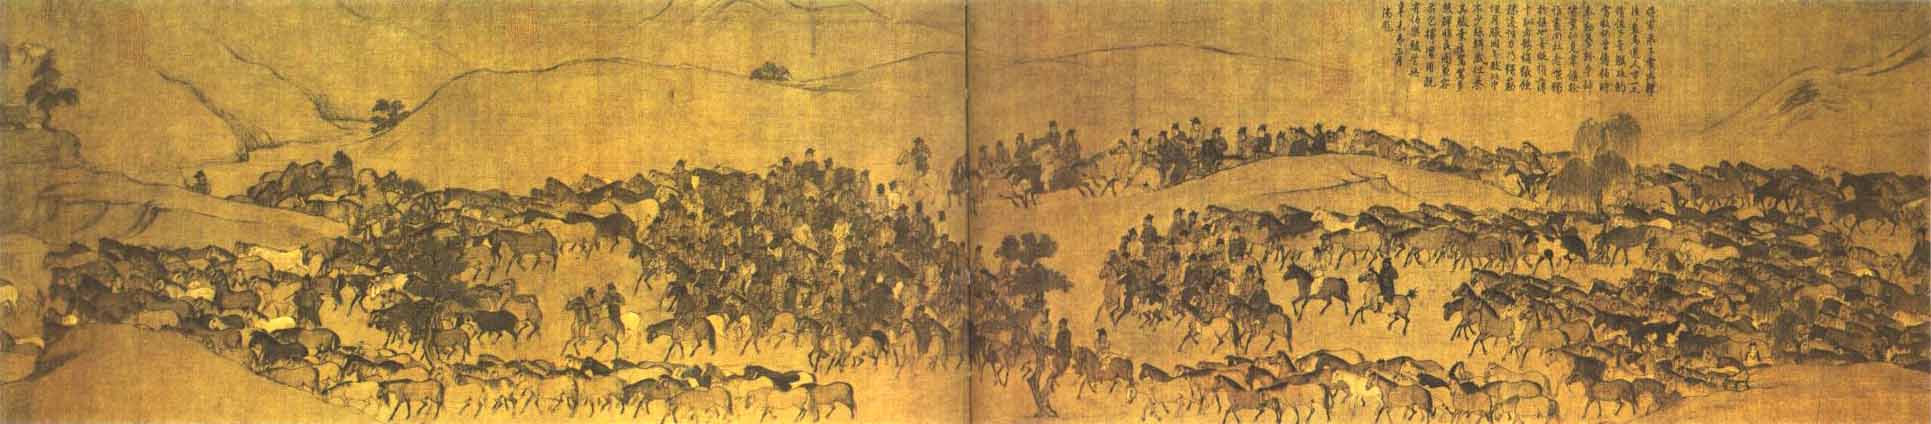 A Copy of Wei Yan's Painting of Herds, Li Gonglin